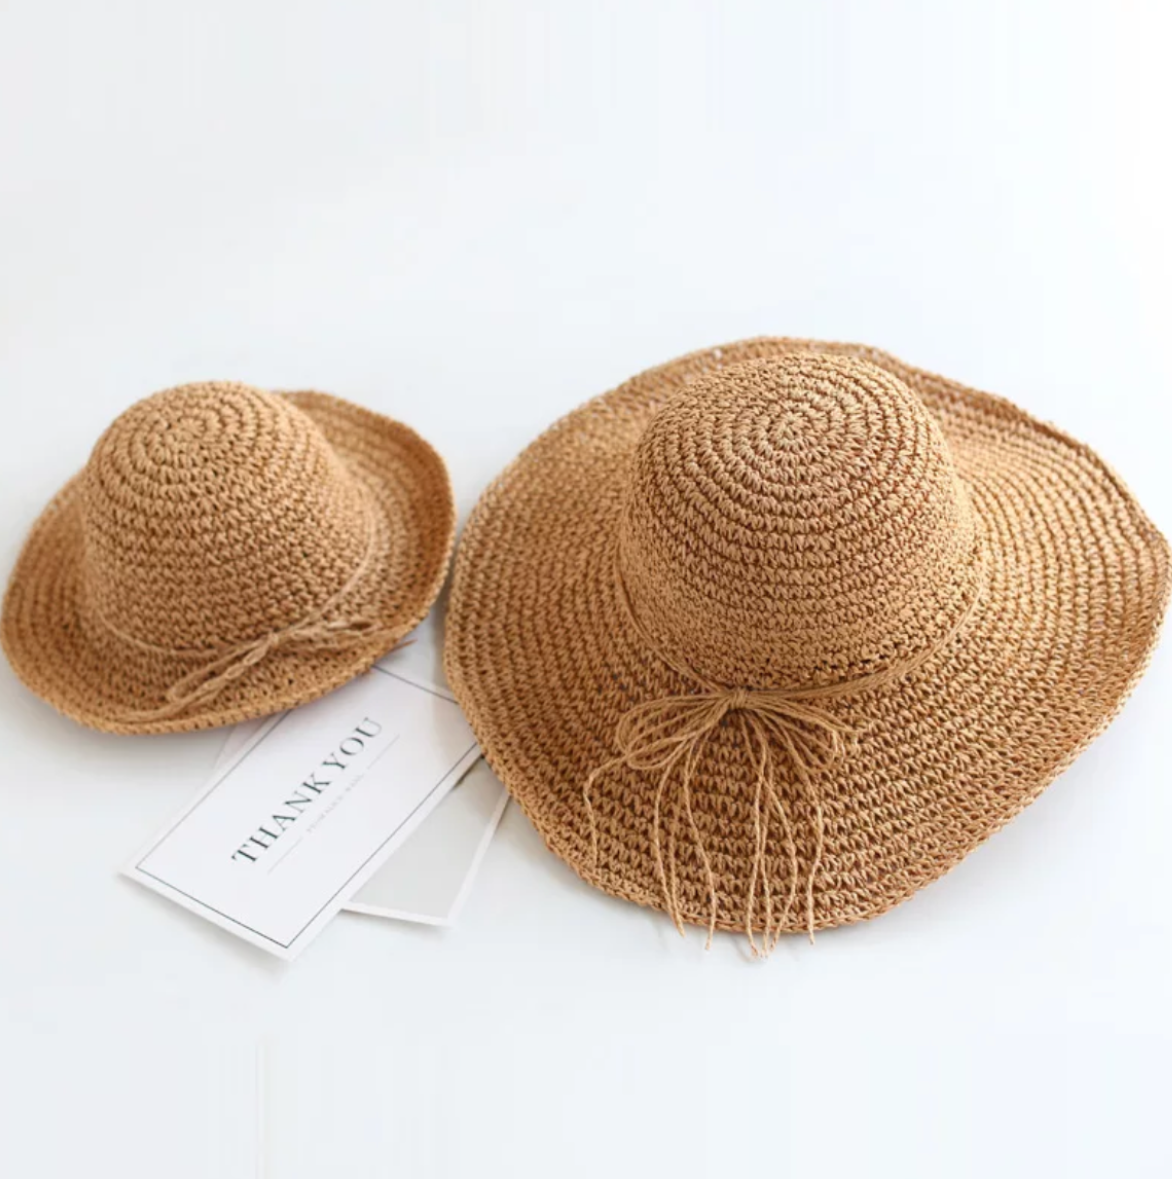 Handmade Sun Hats